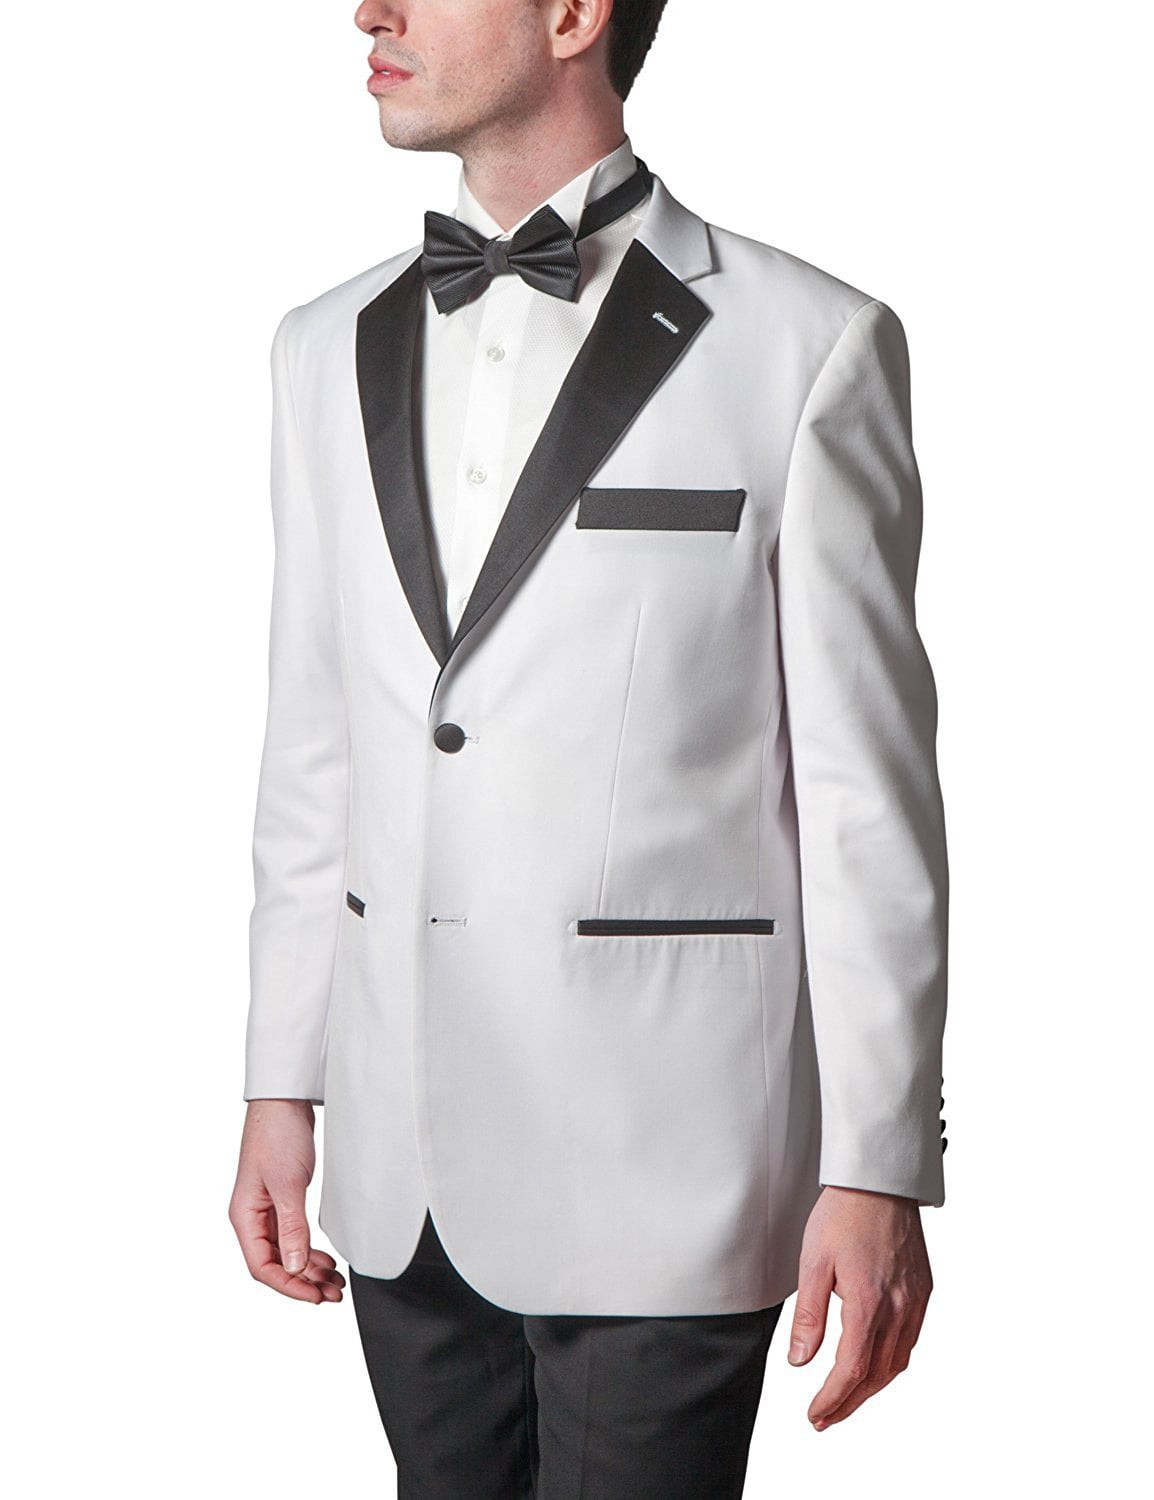 Adam Baker Men's Regular Fit Two Button Notch Lapel Tuxedo Suit